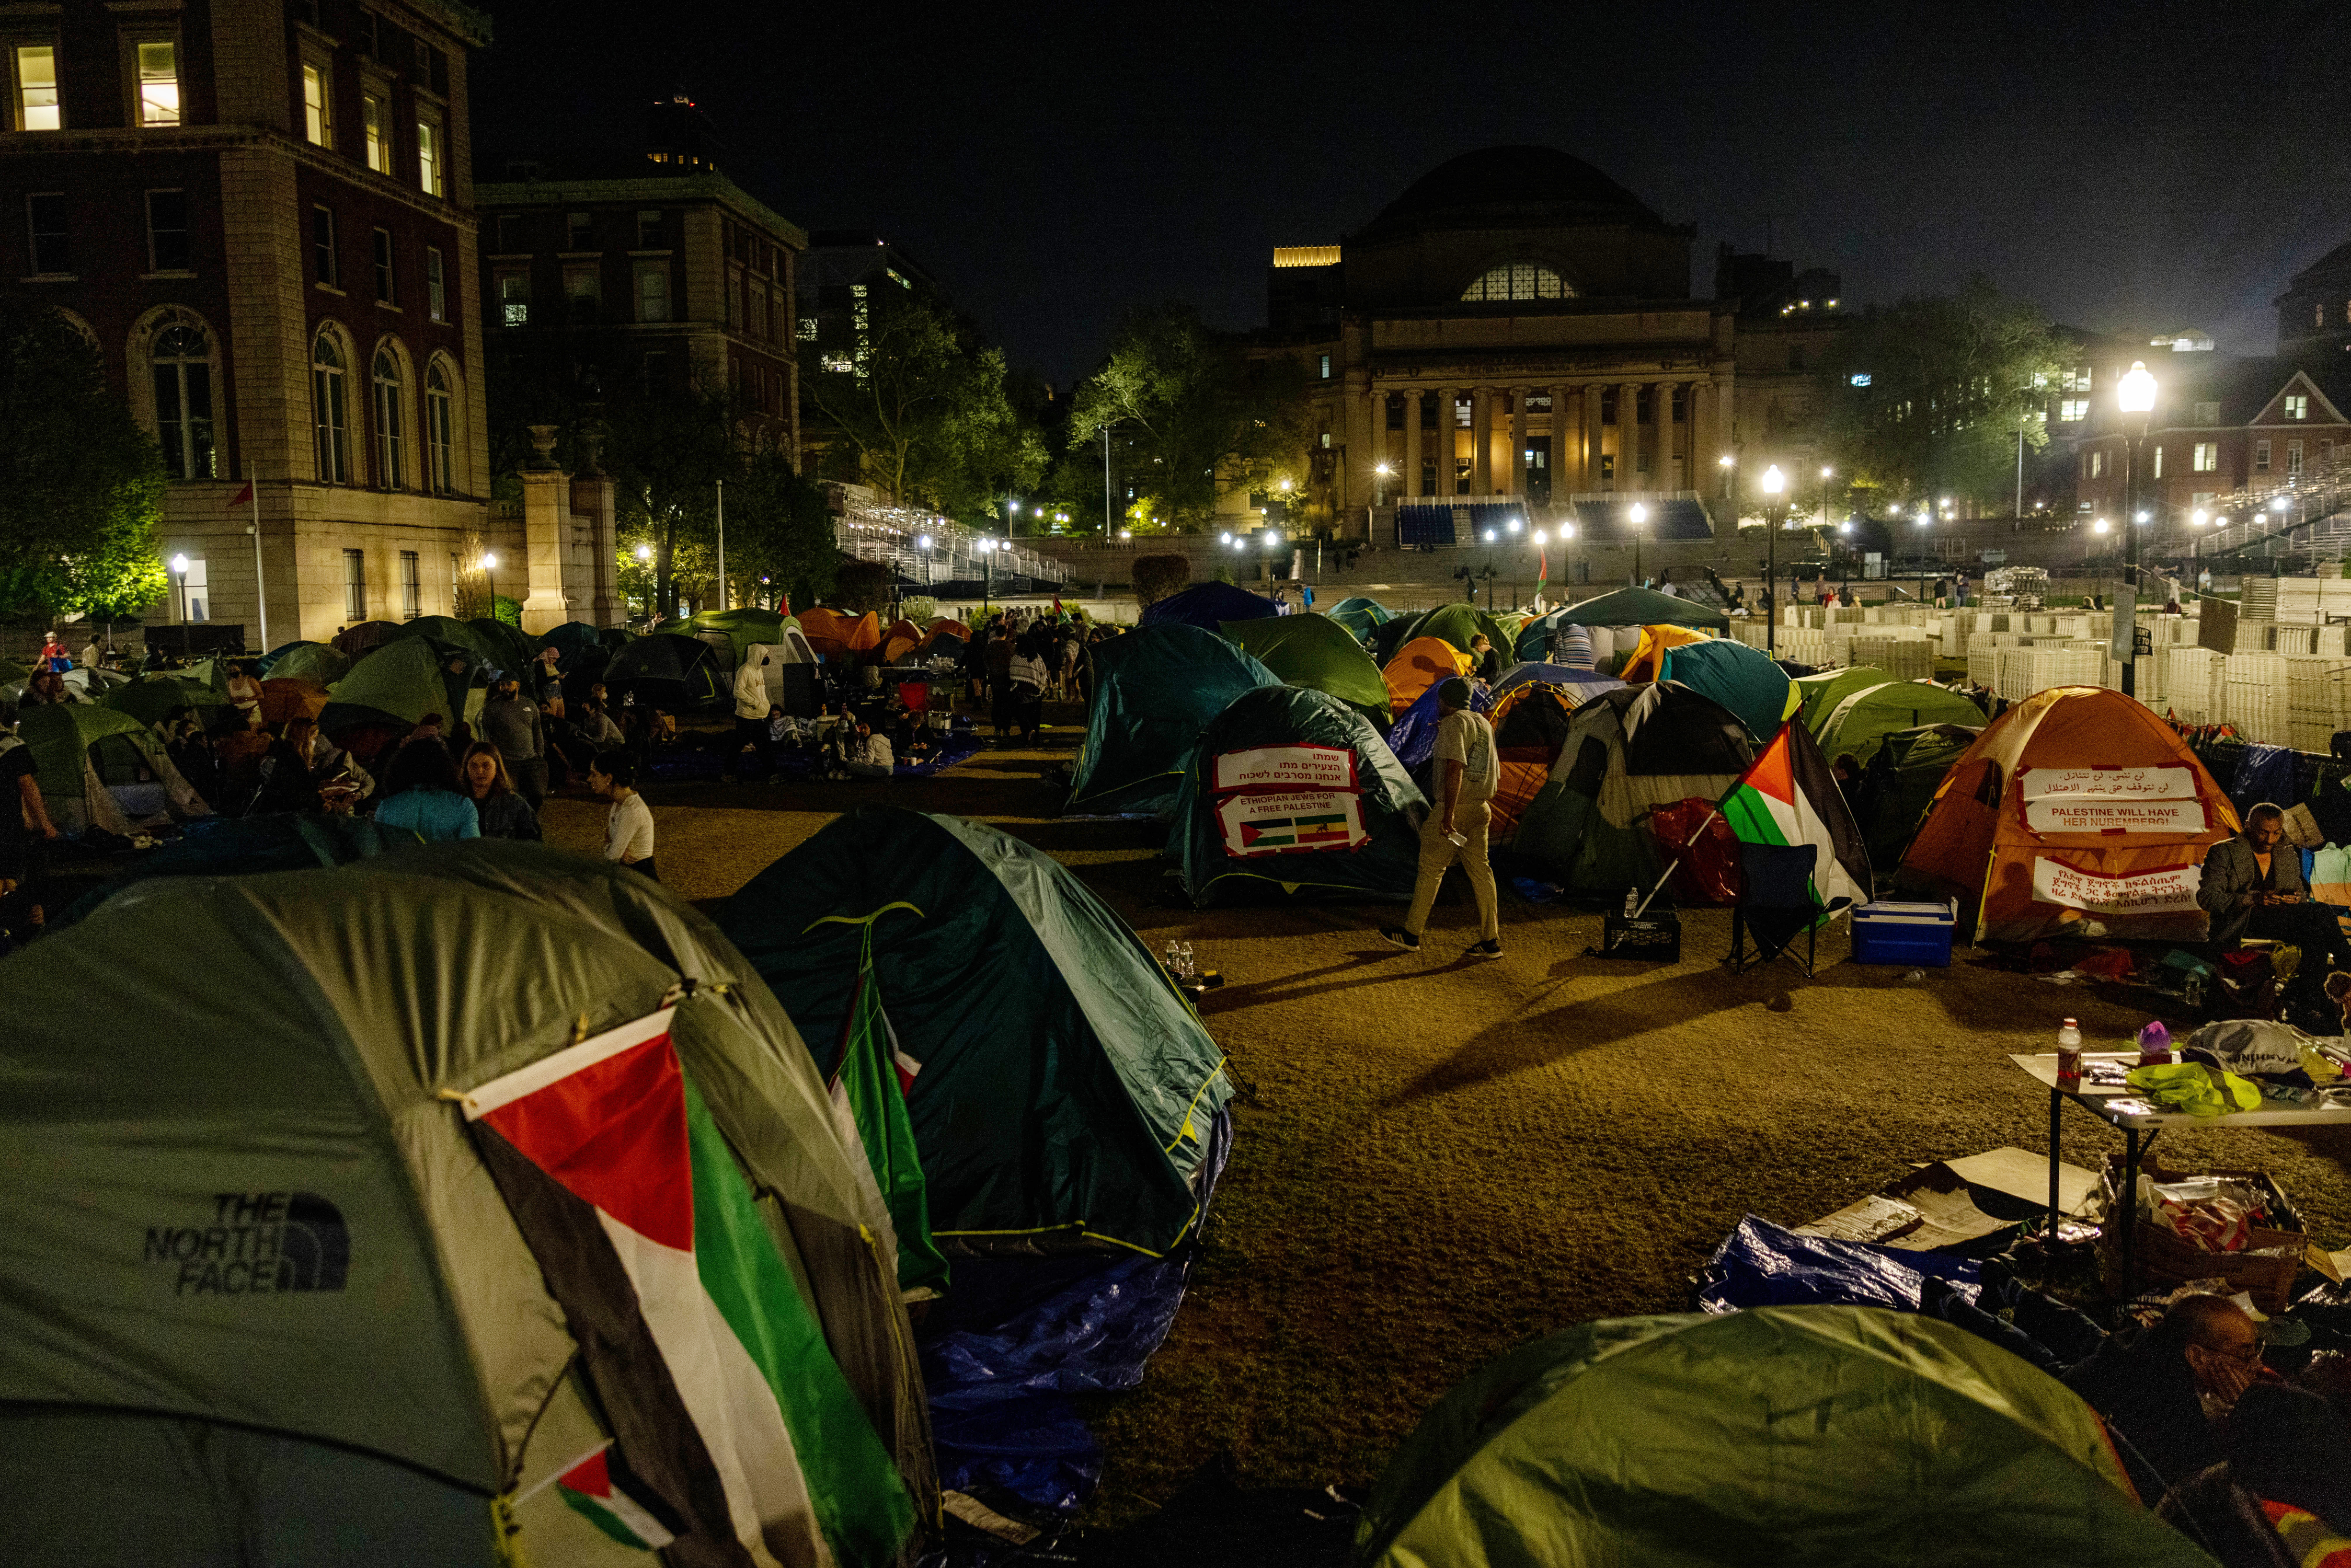 NEWSLINE: Columbia protesters occupy Hamilton Hall overnight